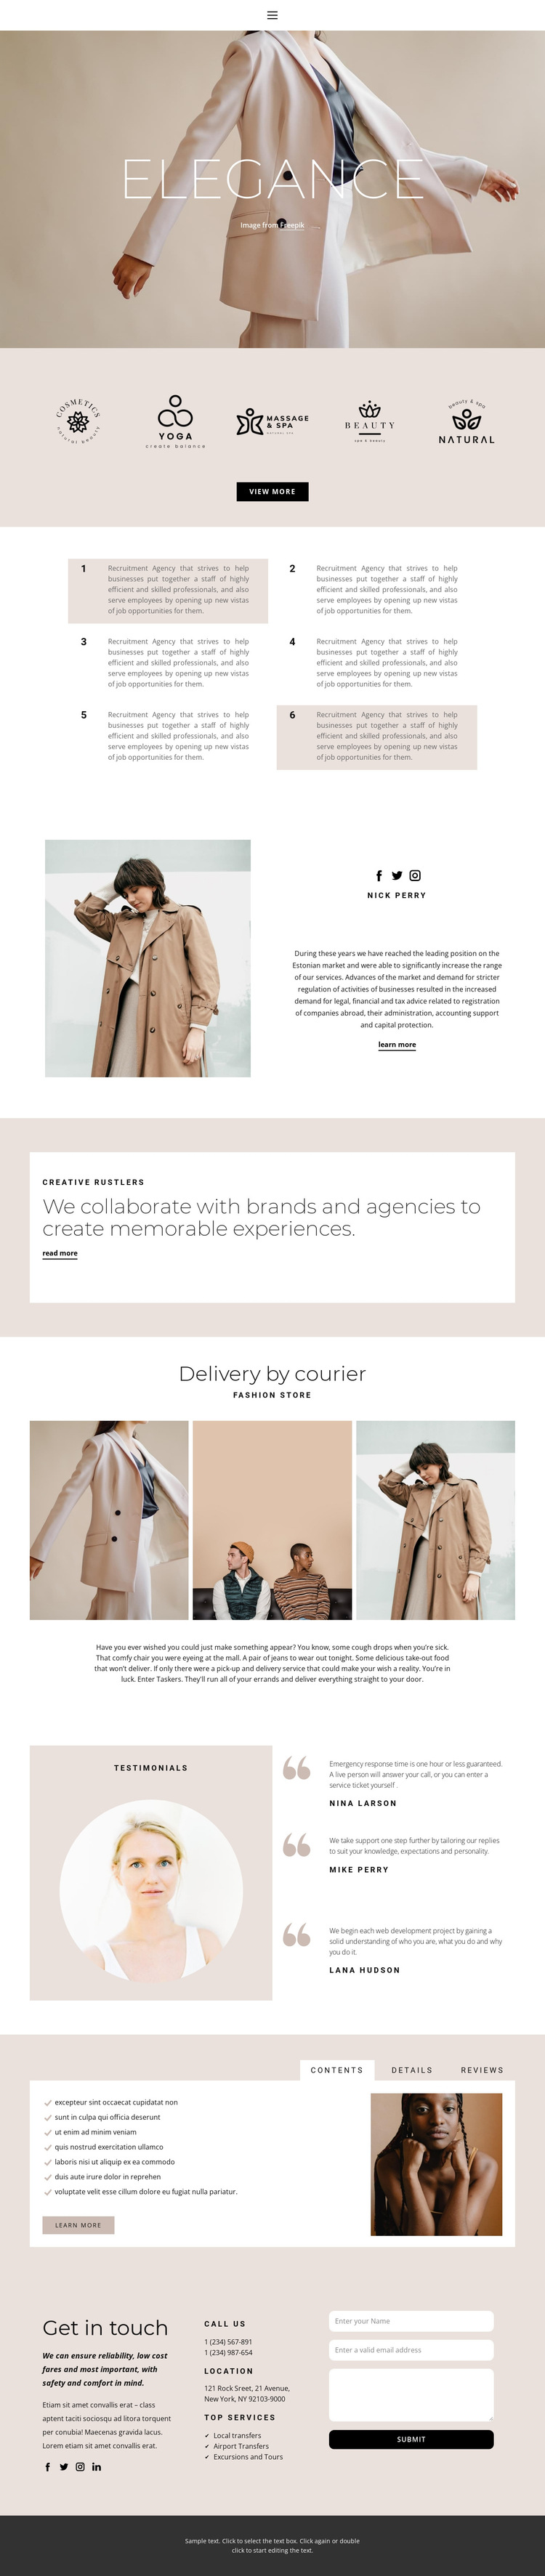 Elegance in fashion HTML5 Template